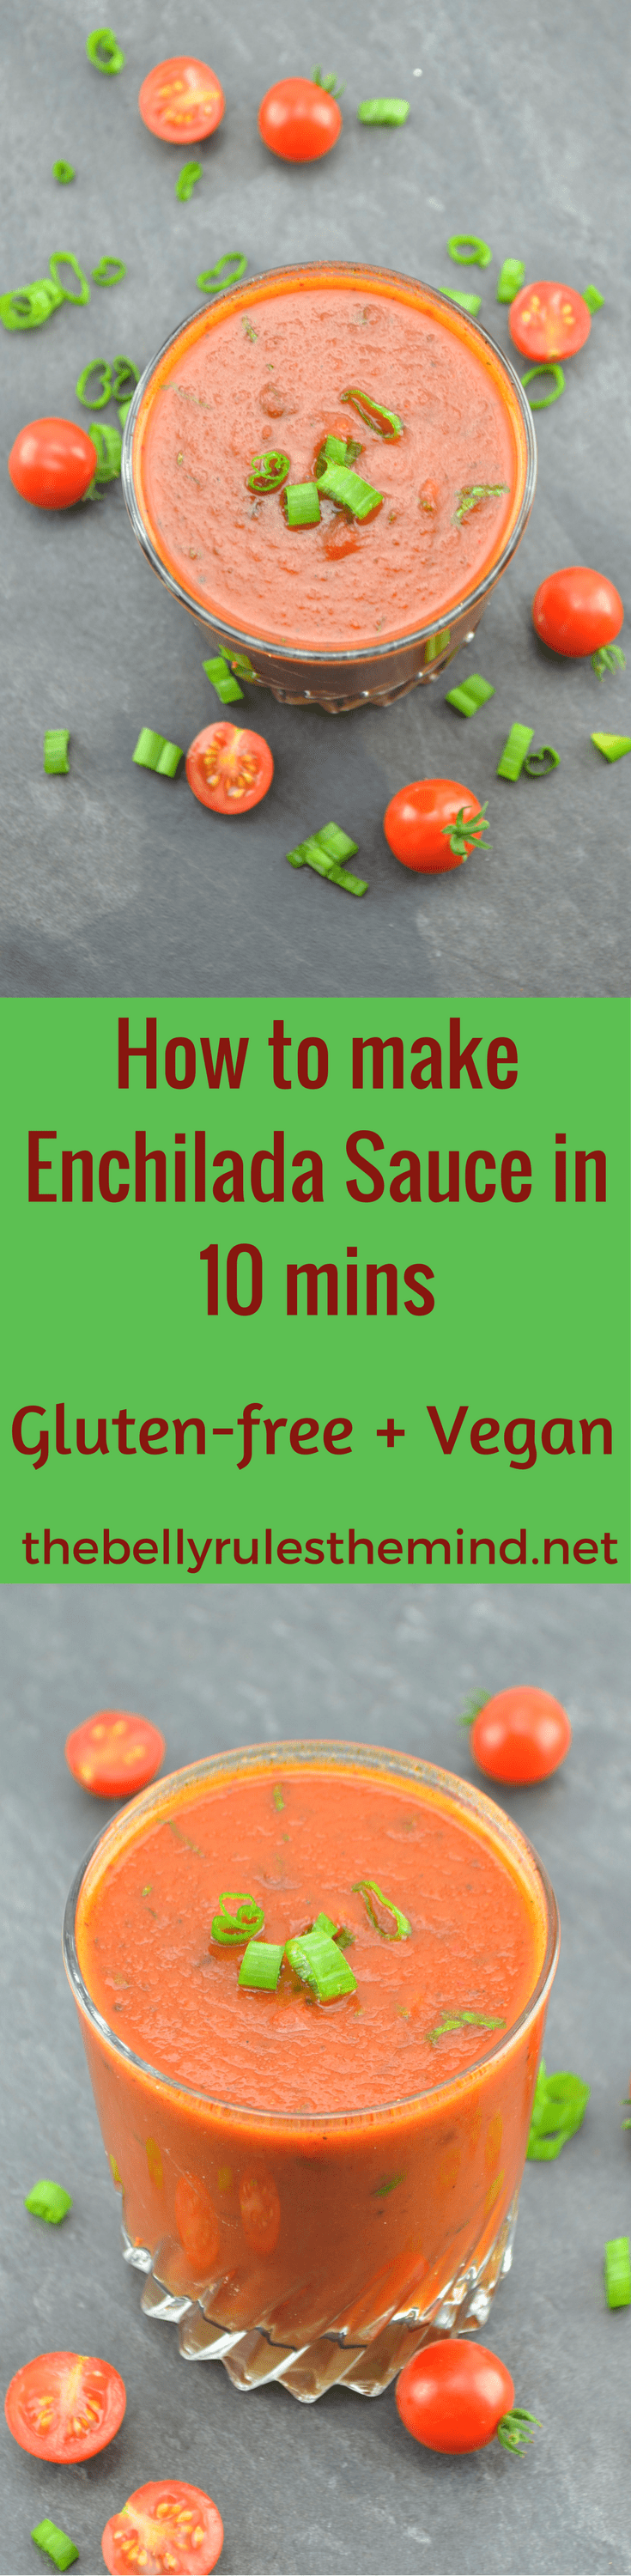 Enchilada sauce in 10 minutes